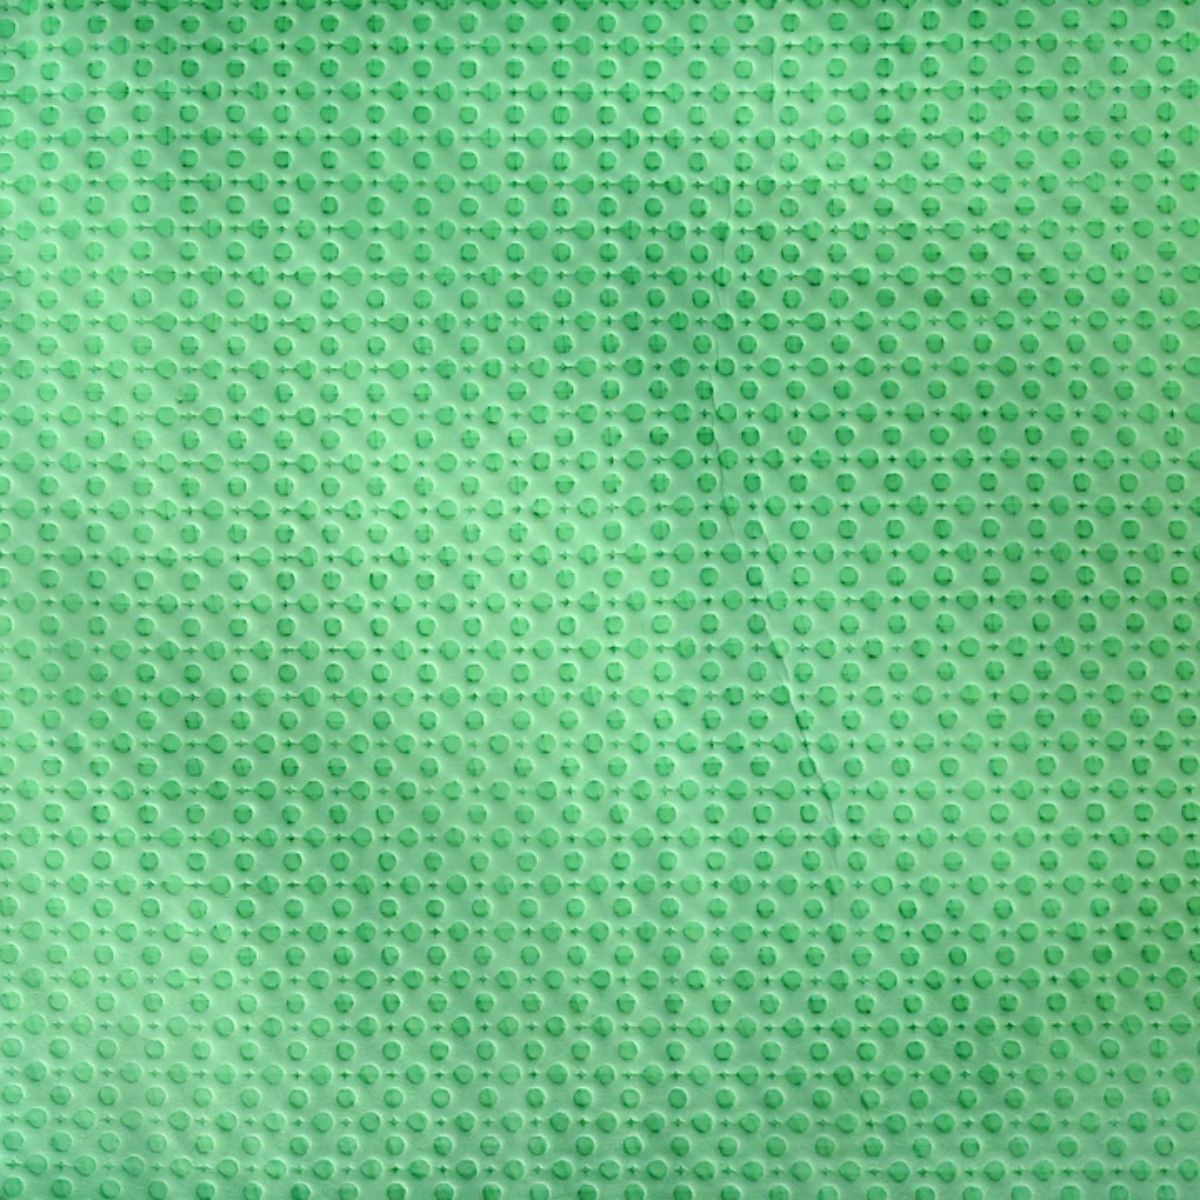 Hyper Body Cooling Towel - Green 3